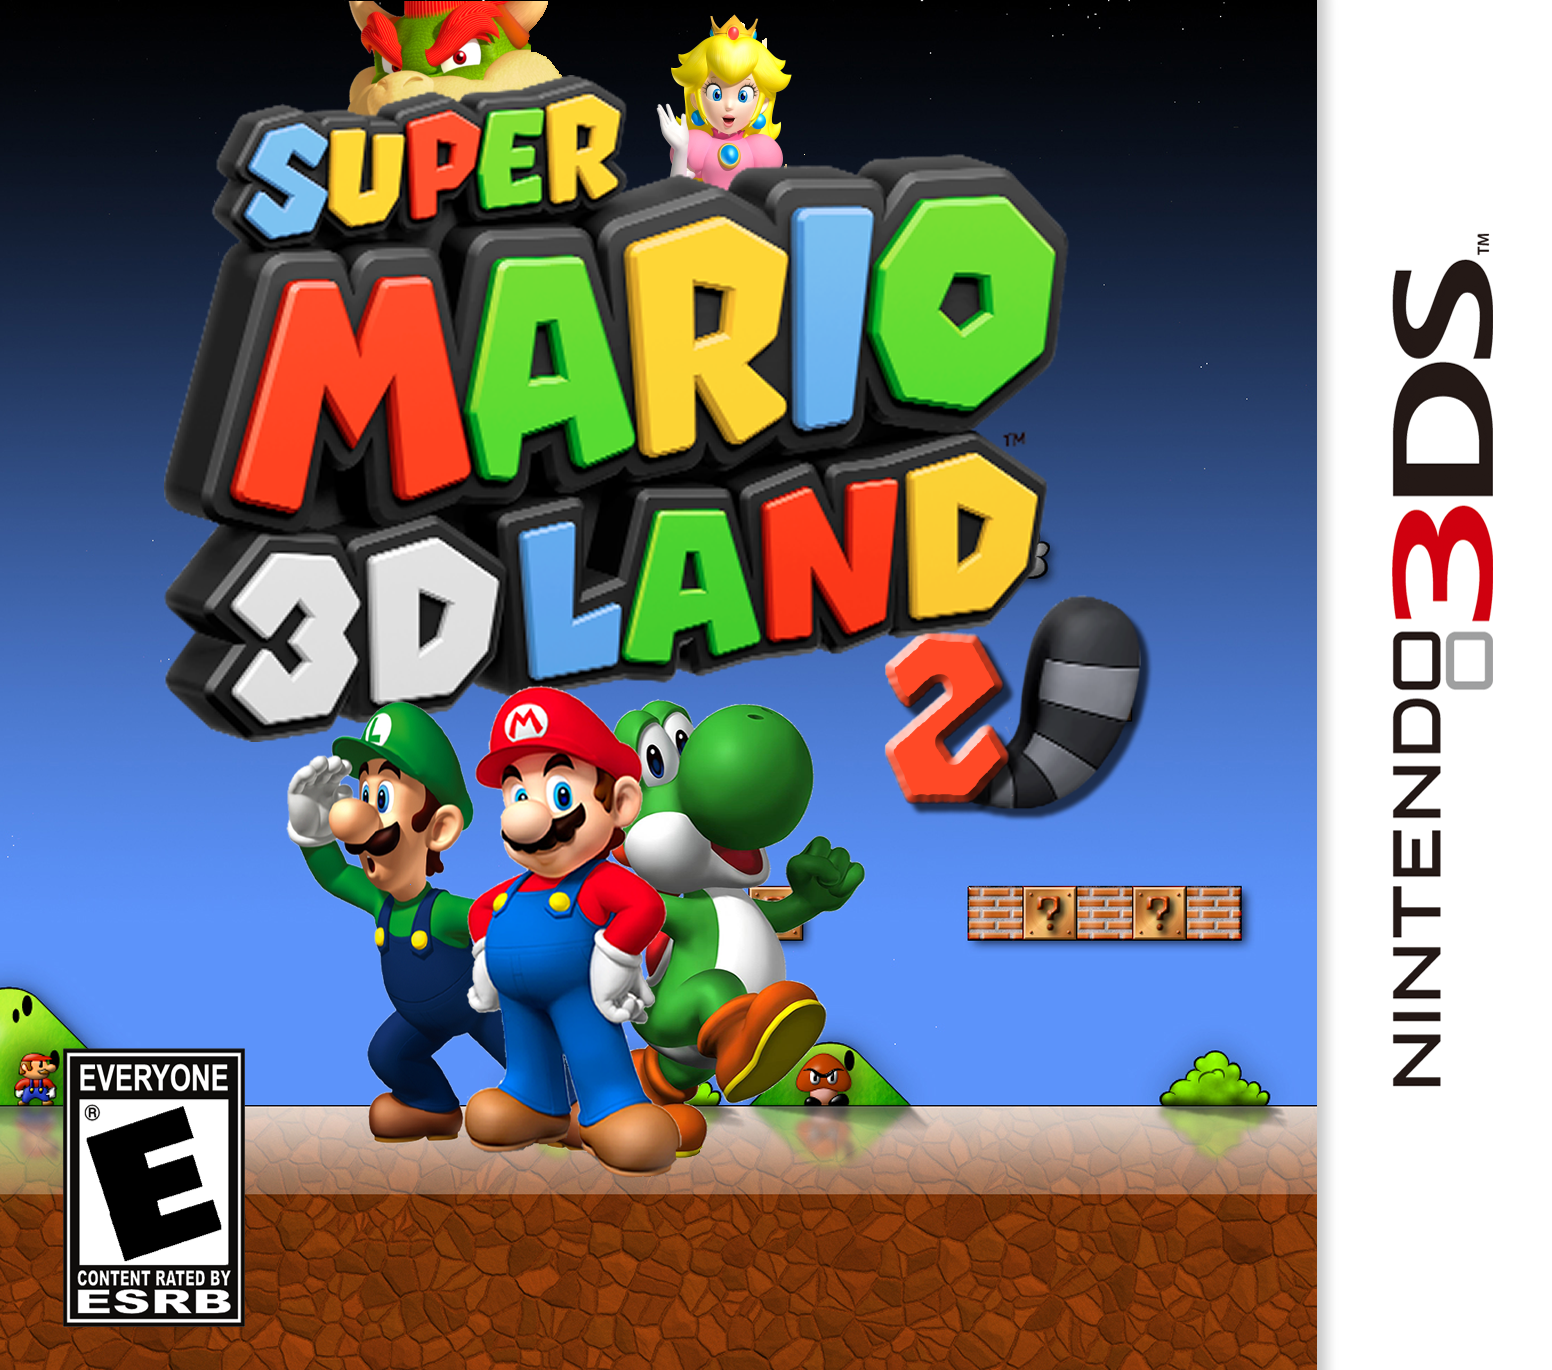 super mario 3d land pc game full version free download